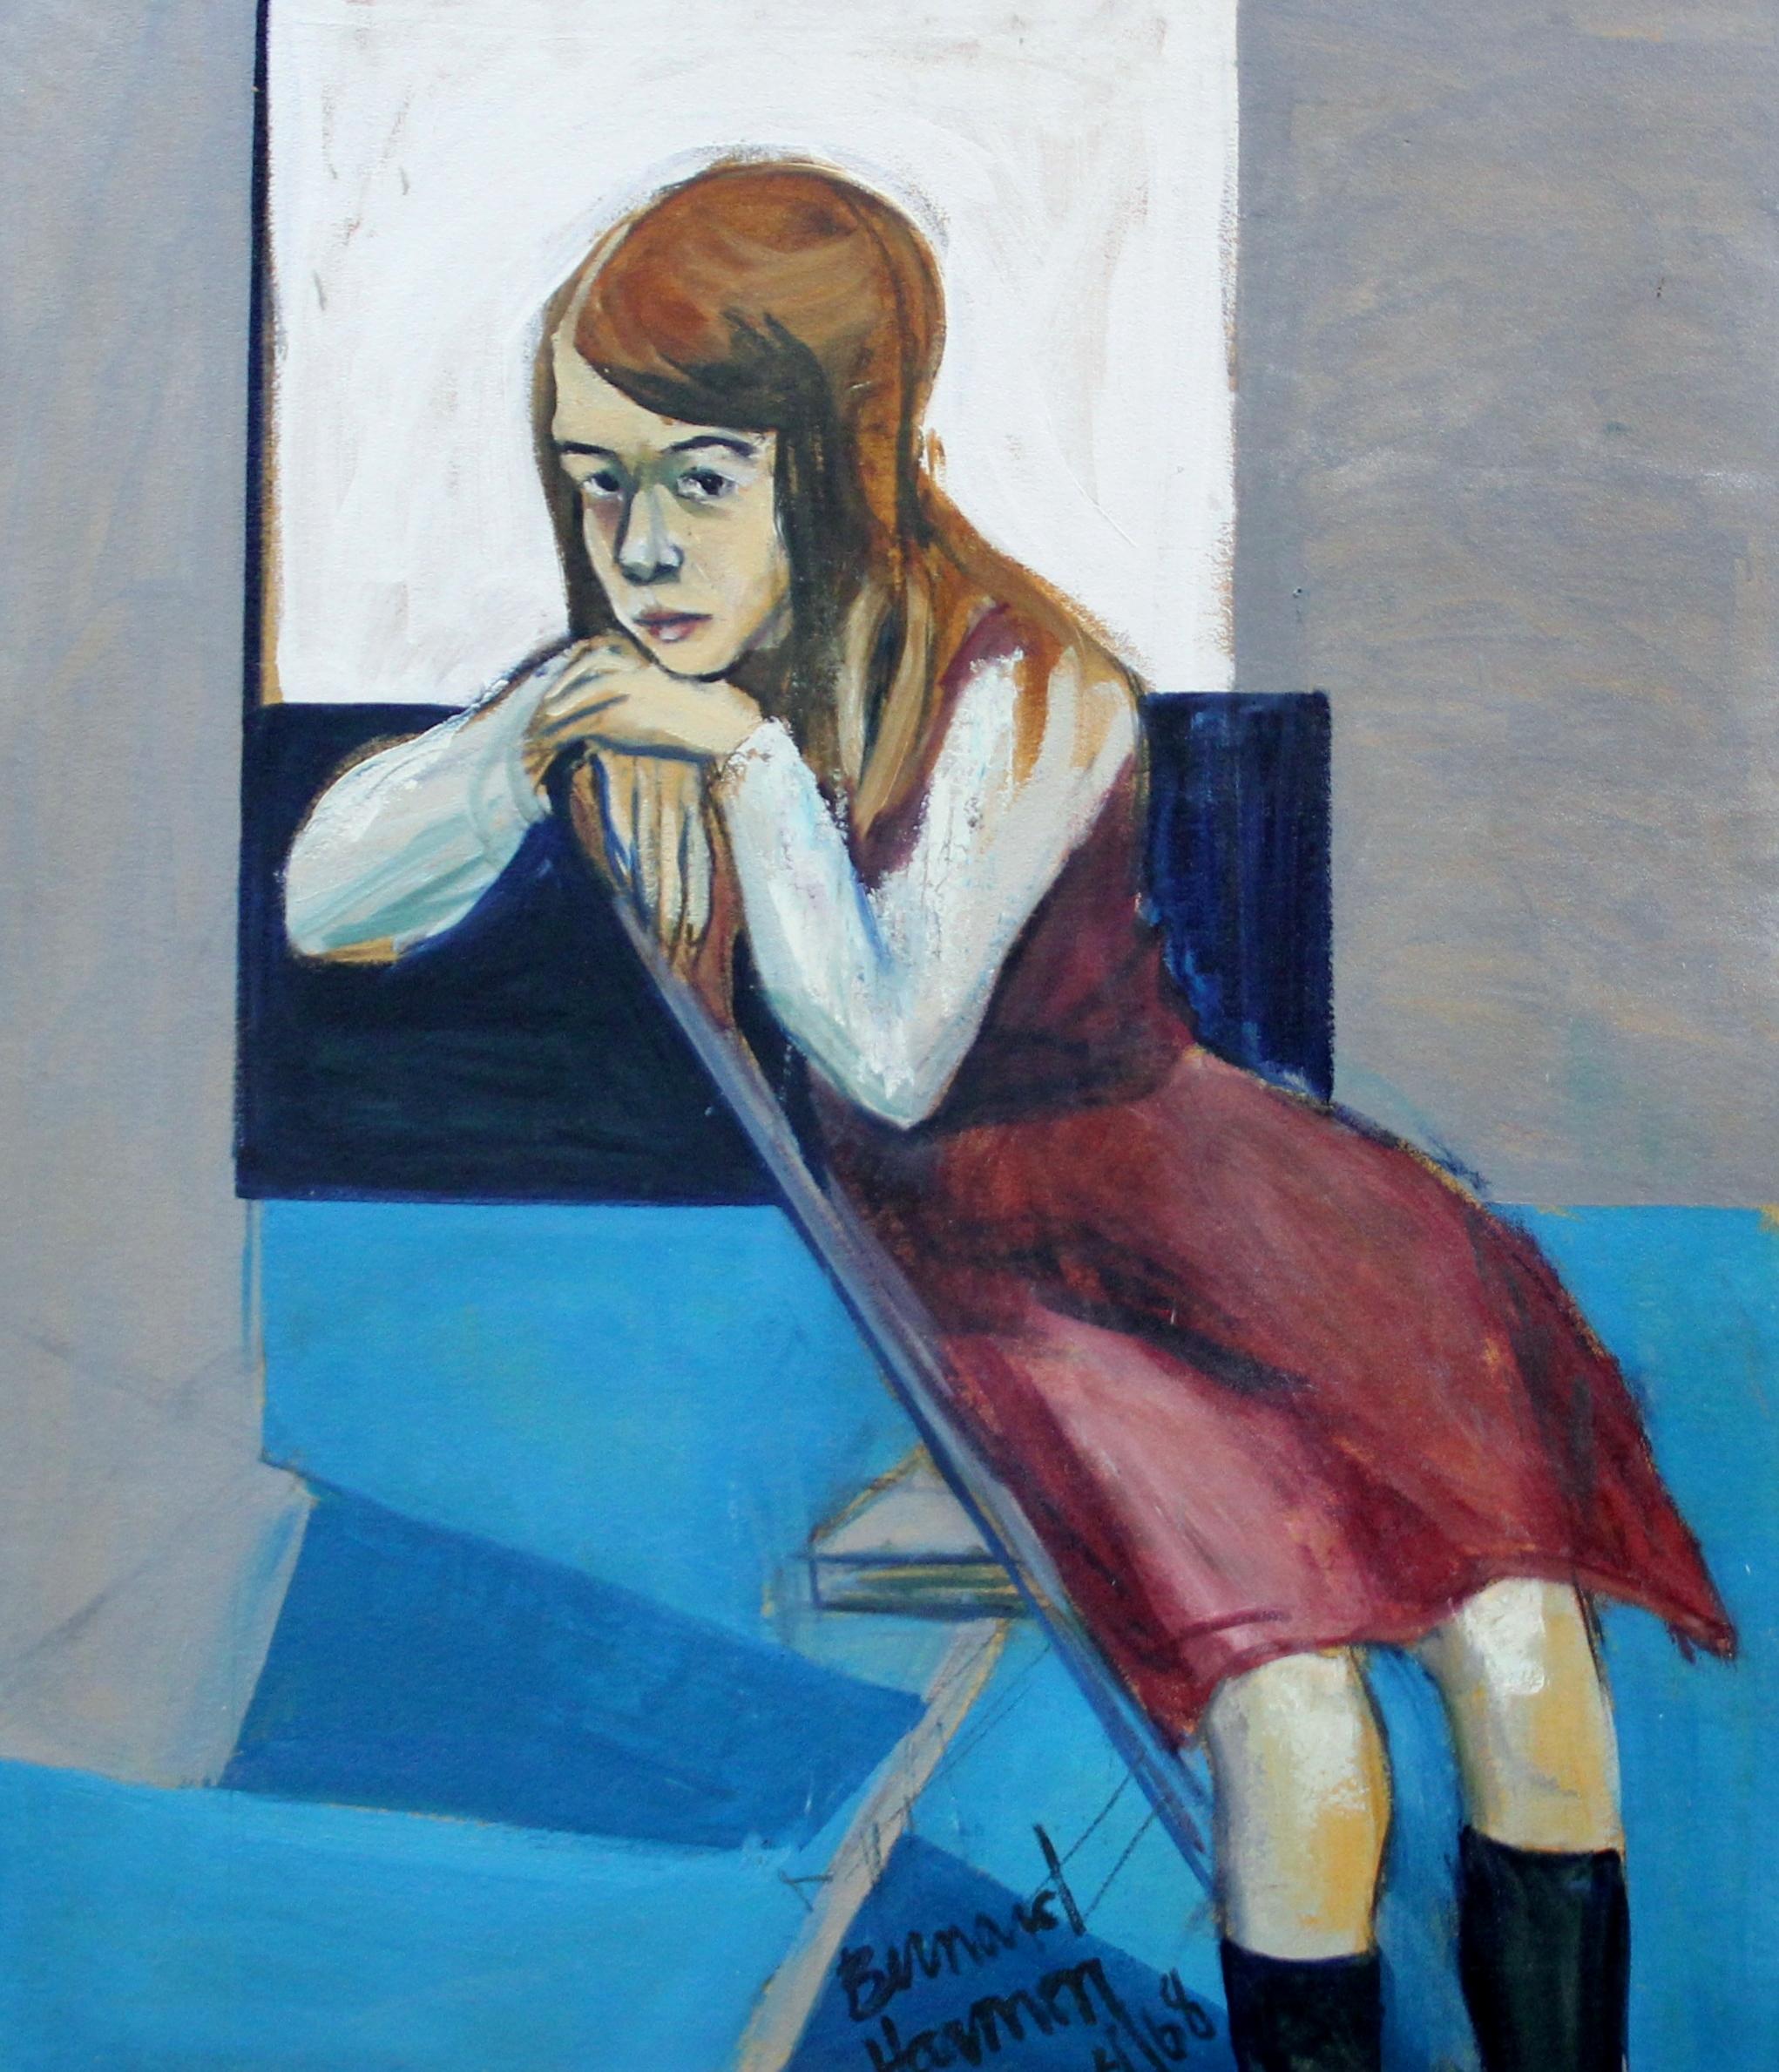 Bernard Harmon Portrait Painting - School Girl, Expressionist Portrait by Philadelphia Artist